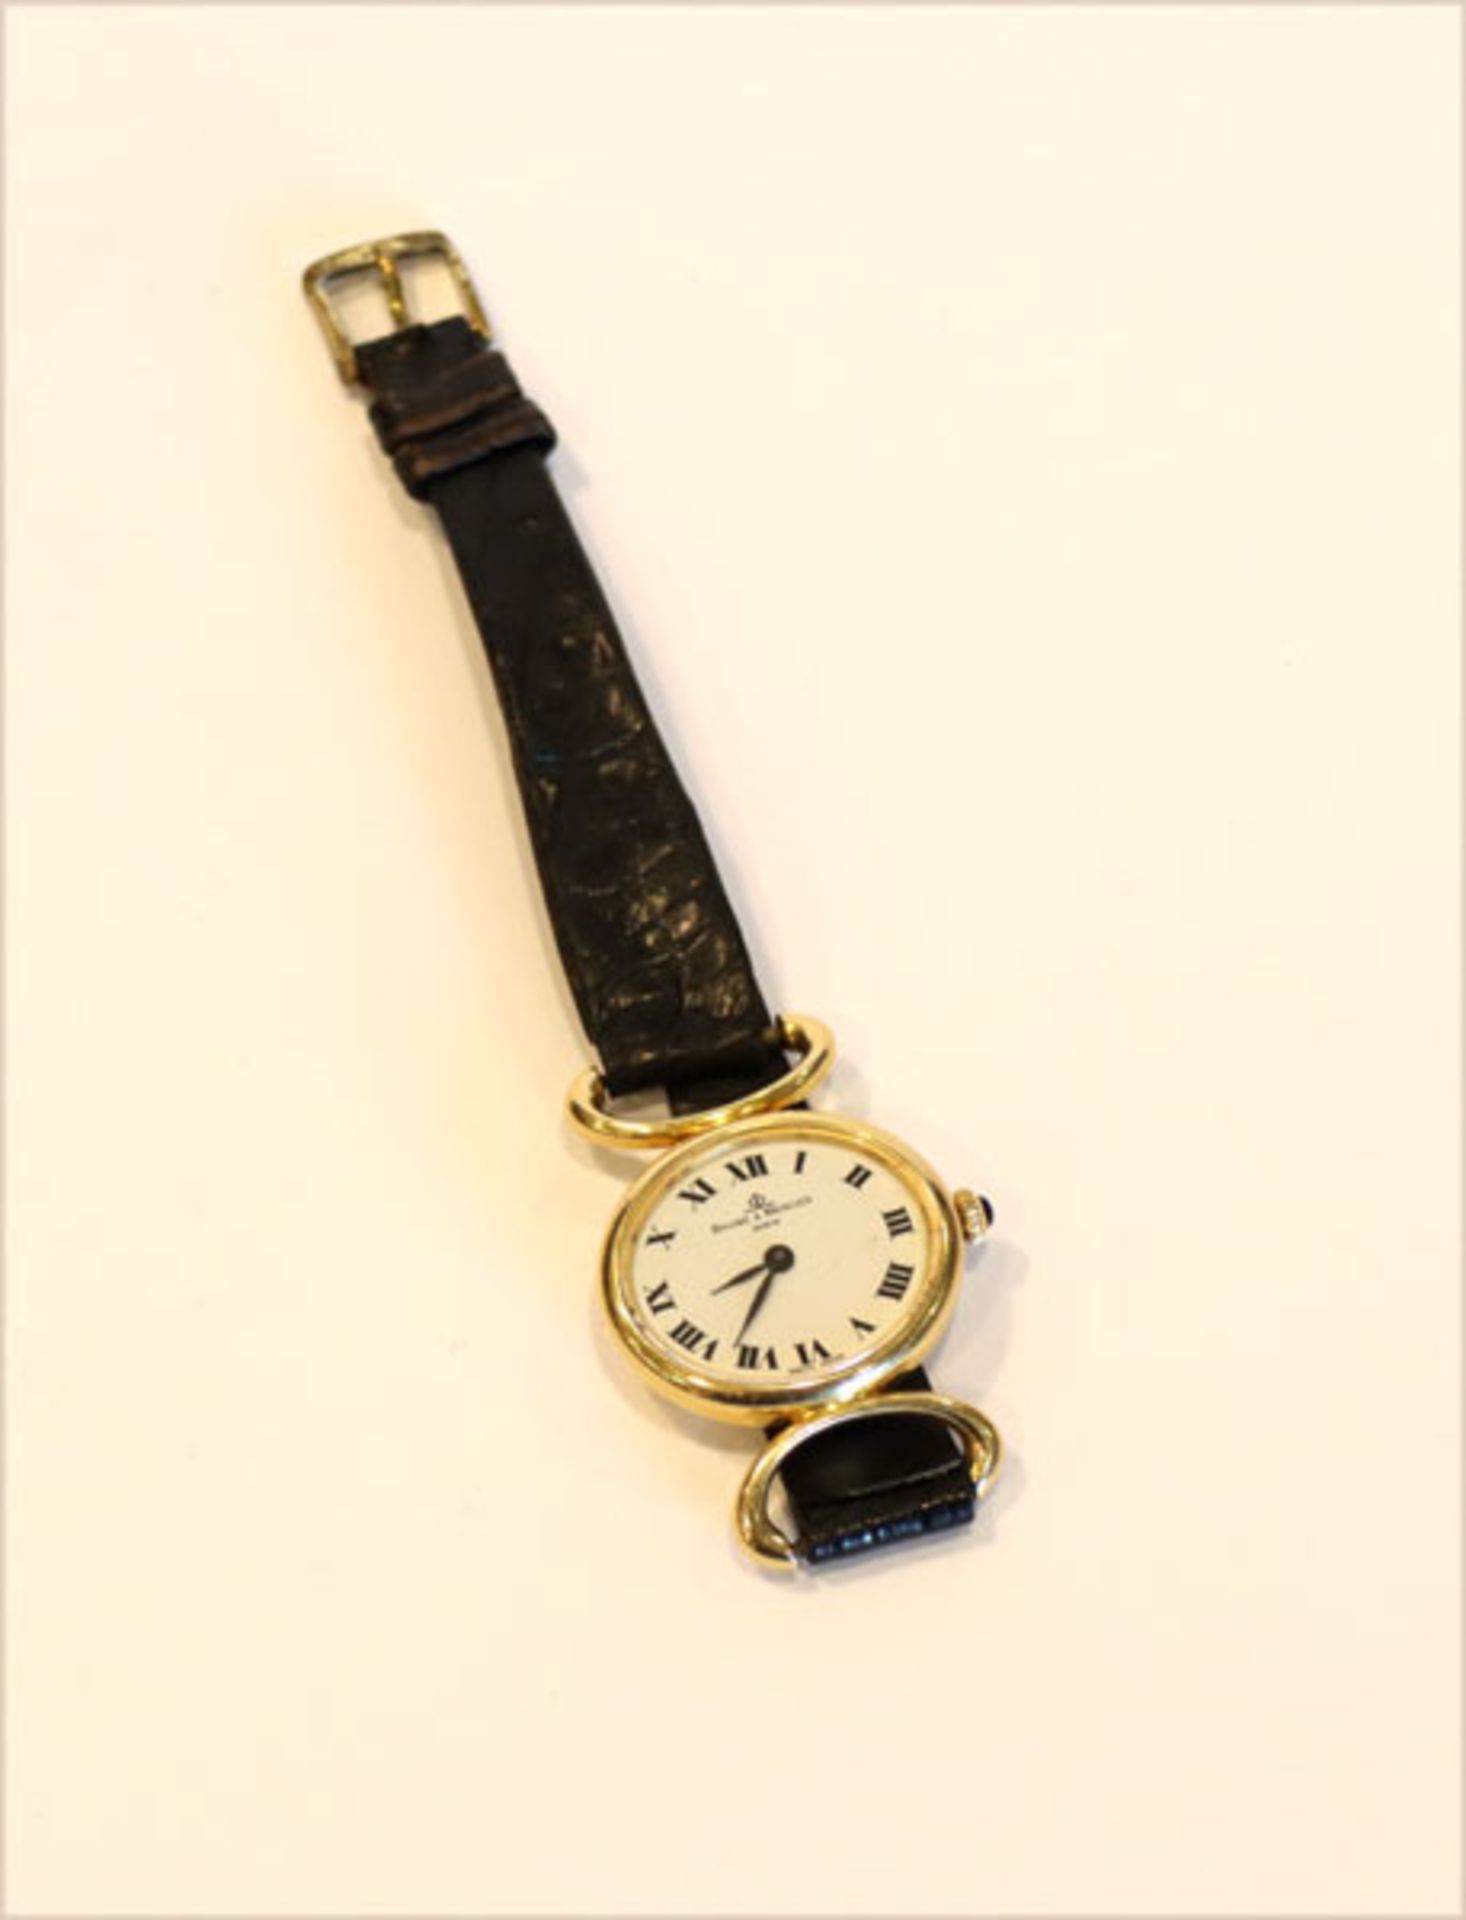 Baume & Mercier Geneve Damen Armbanduhr, 18 k Gelbgold an schwarzem Lederarmband, getragen, intakt